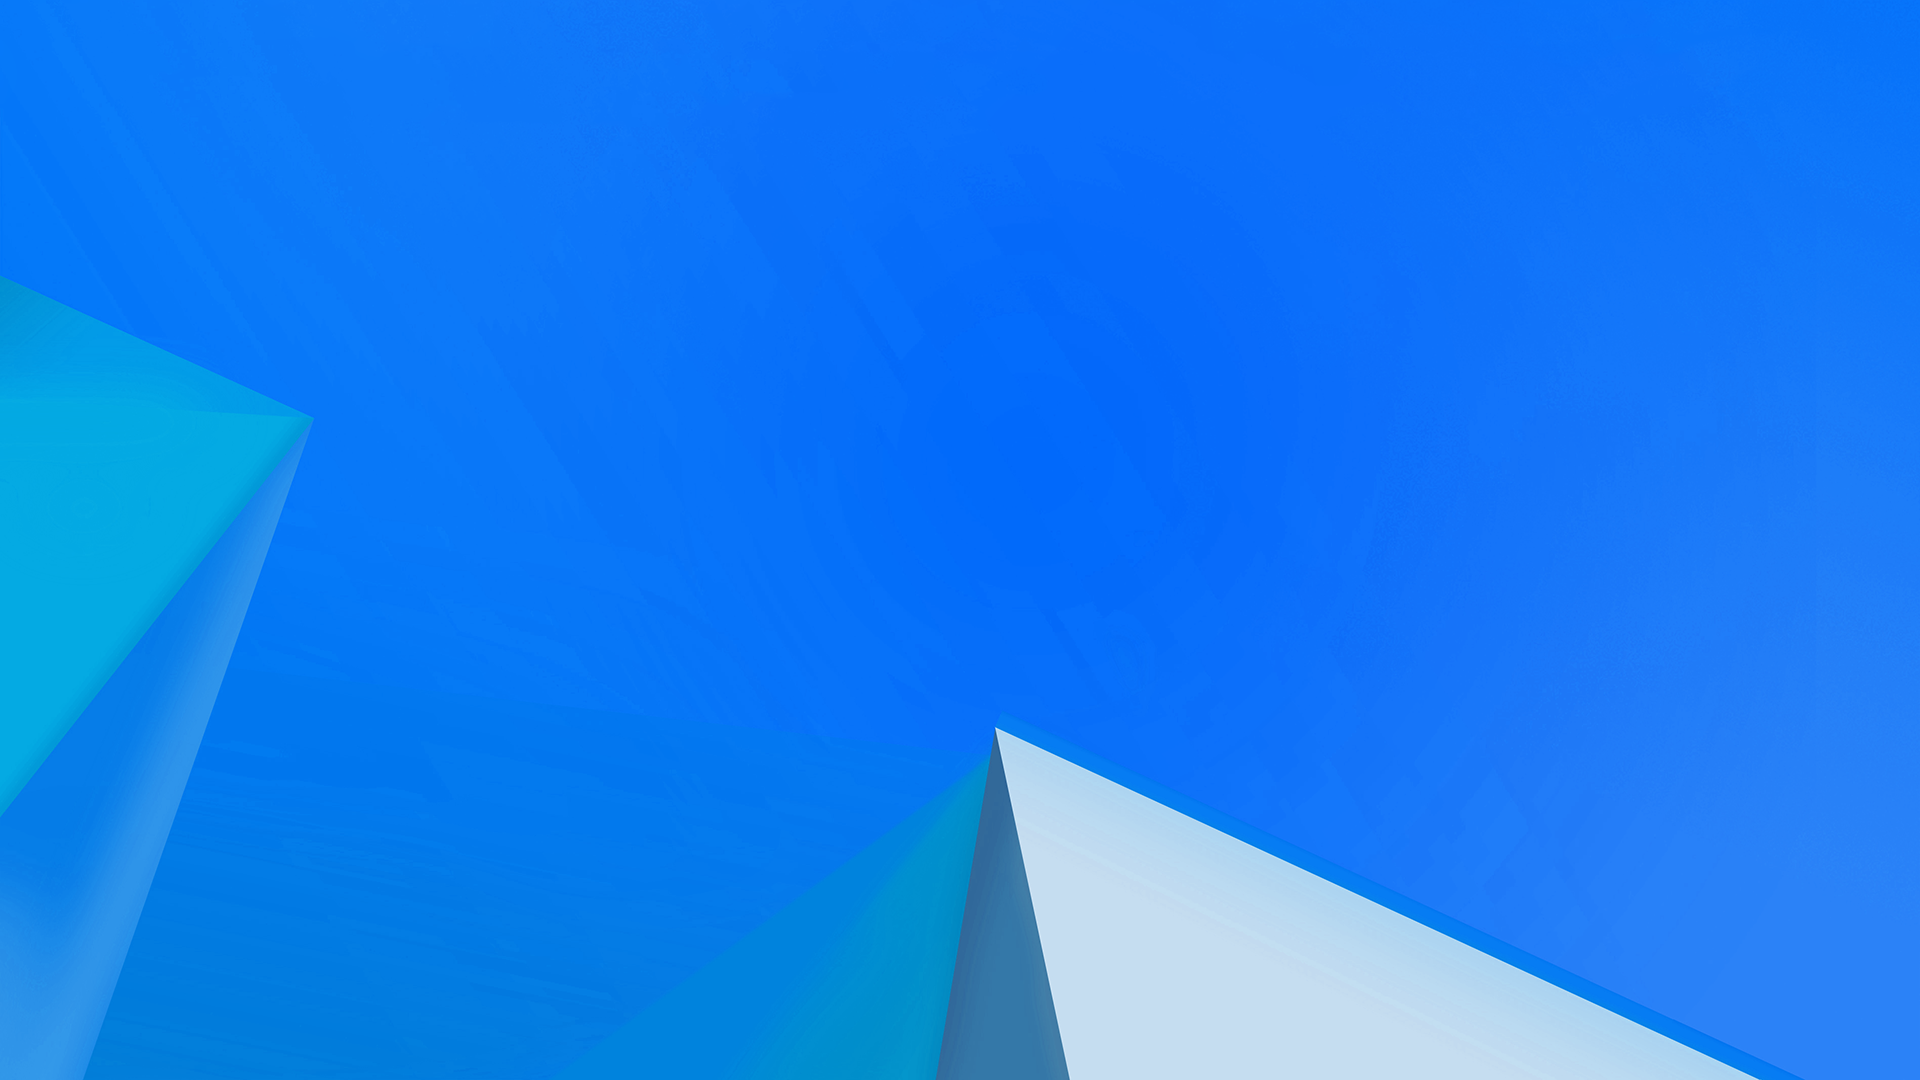 Windows 8 1 wallpaper blue by studio384 on deviantart Chainimage